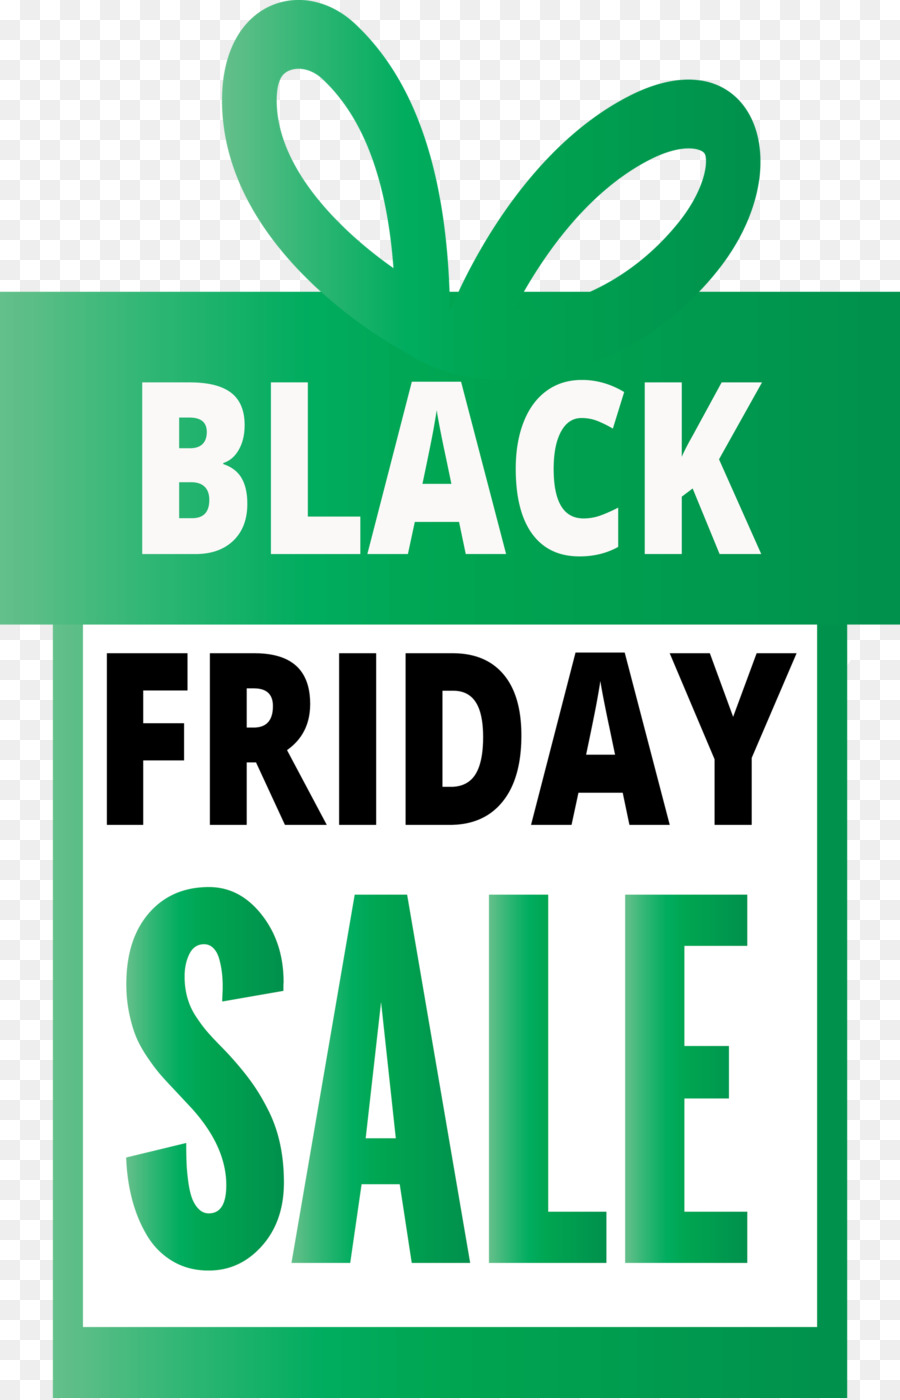 Black Friday Sale Black Friday Discount Black Friday